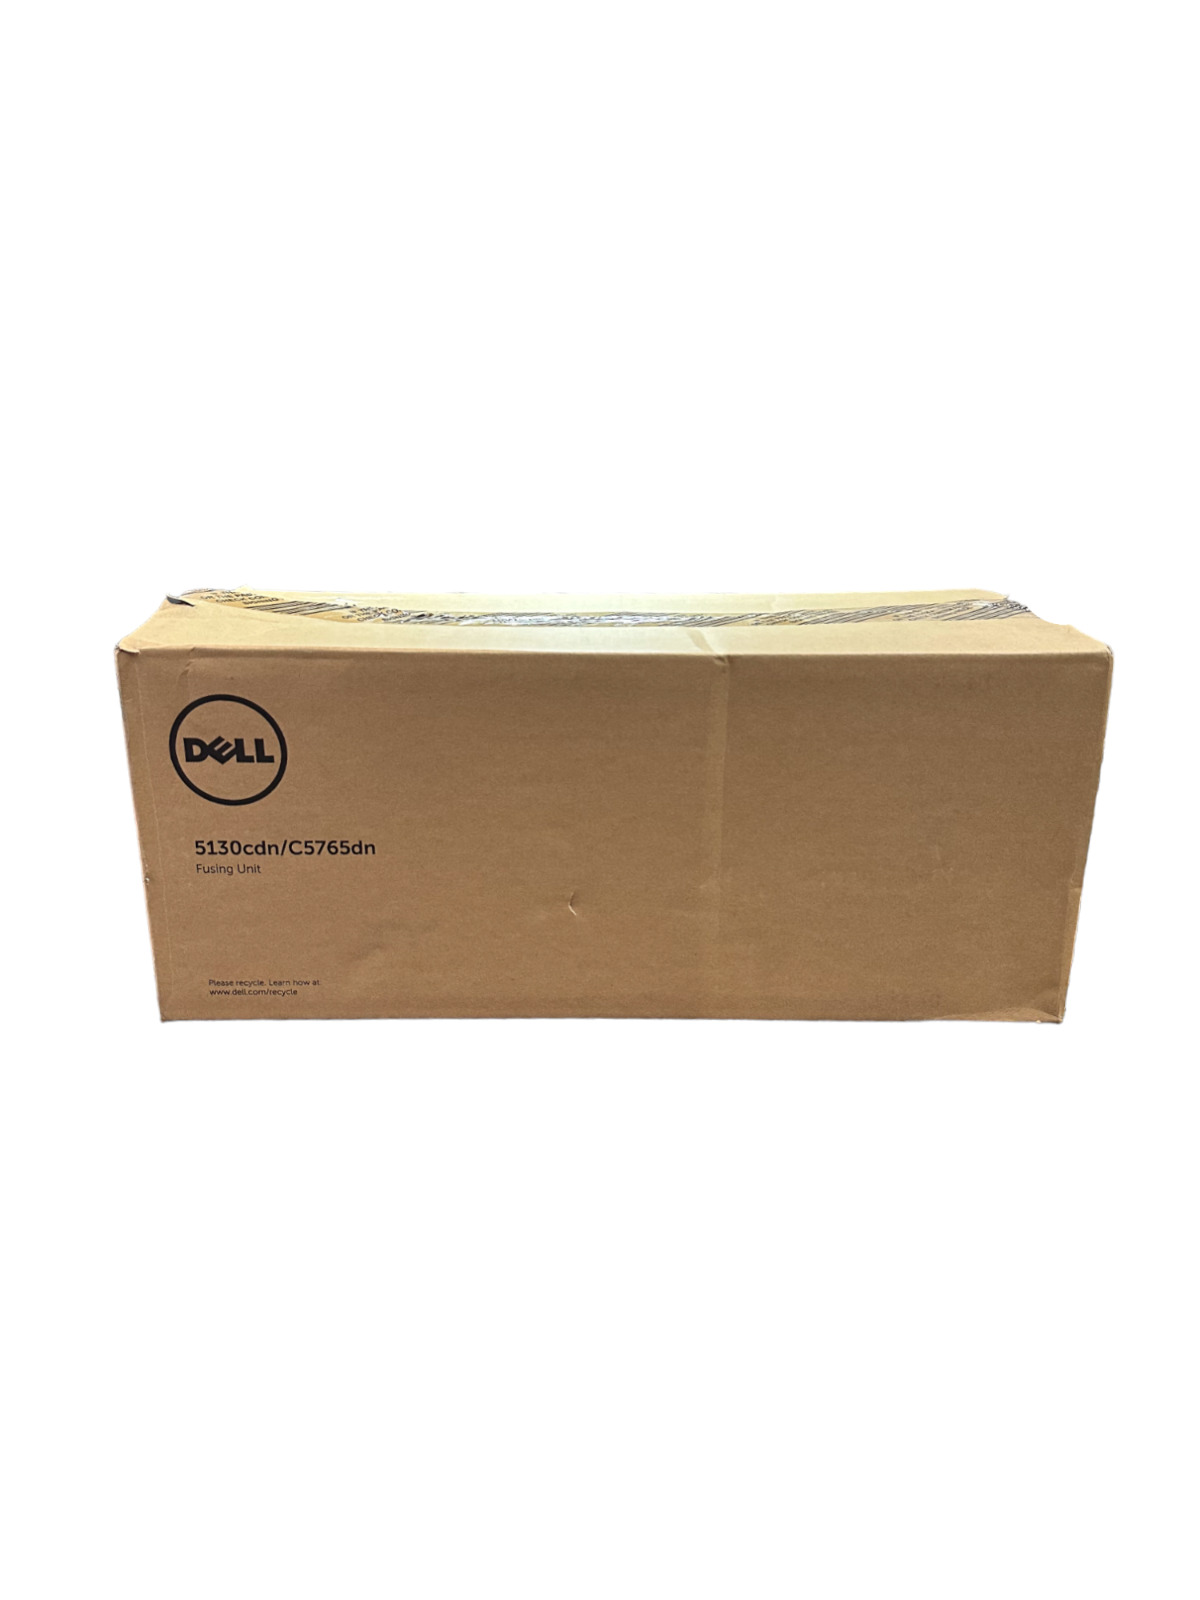 Genuine Dell N856N Fusing Unit 5130cdn C5765dn NEW OEM OPEN BOX please read